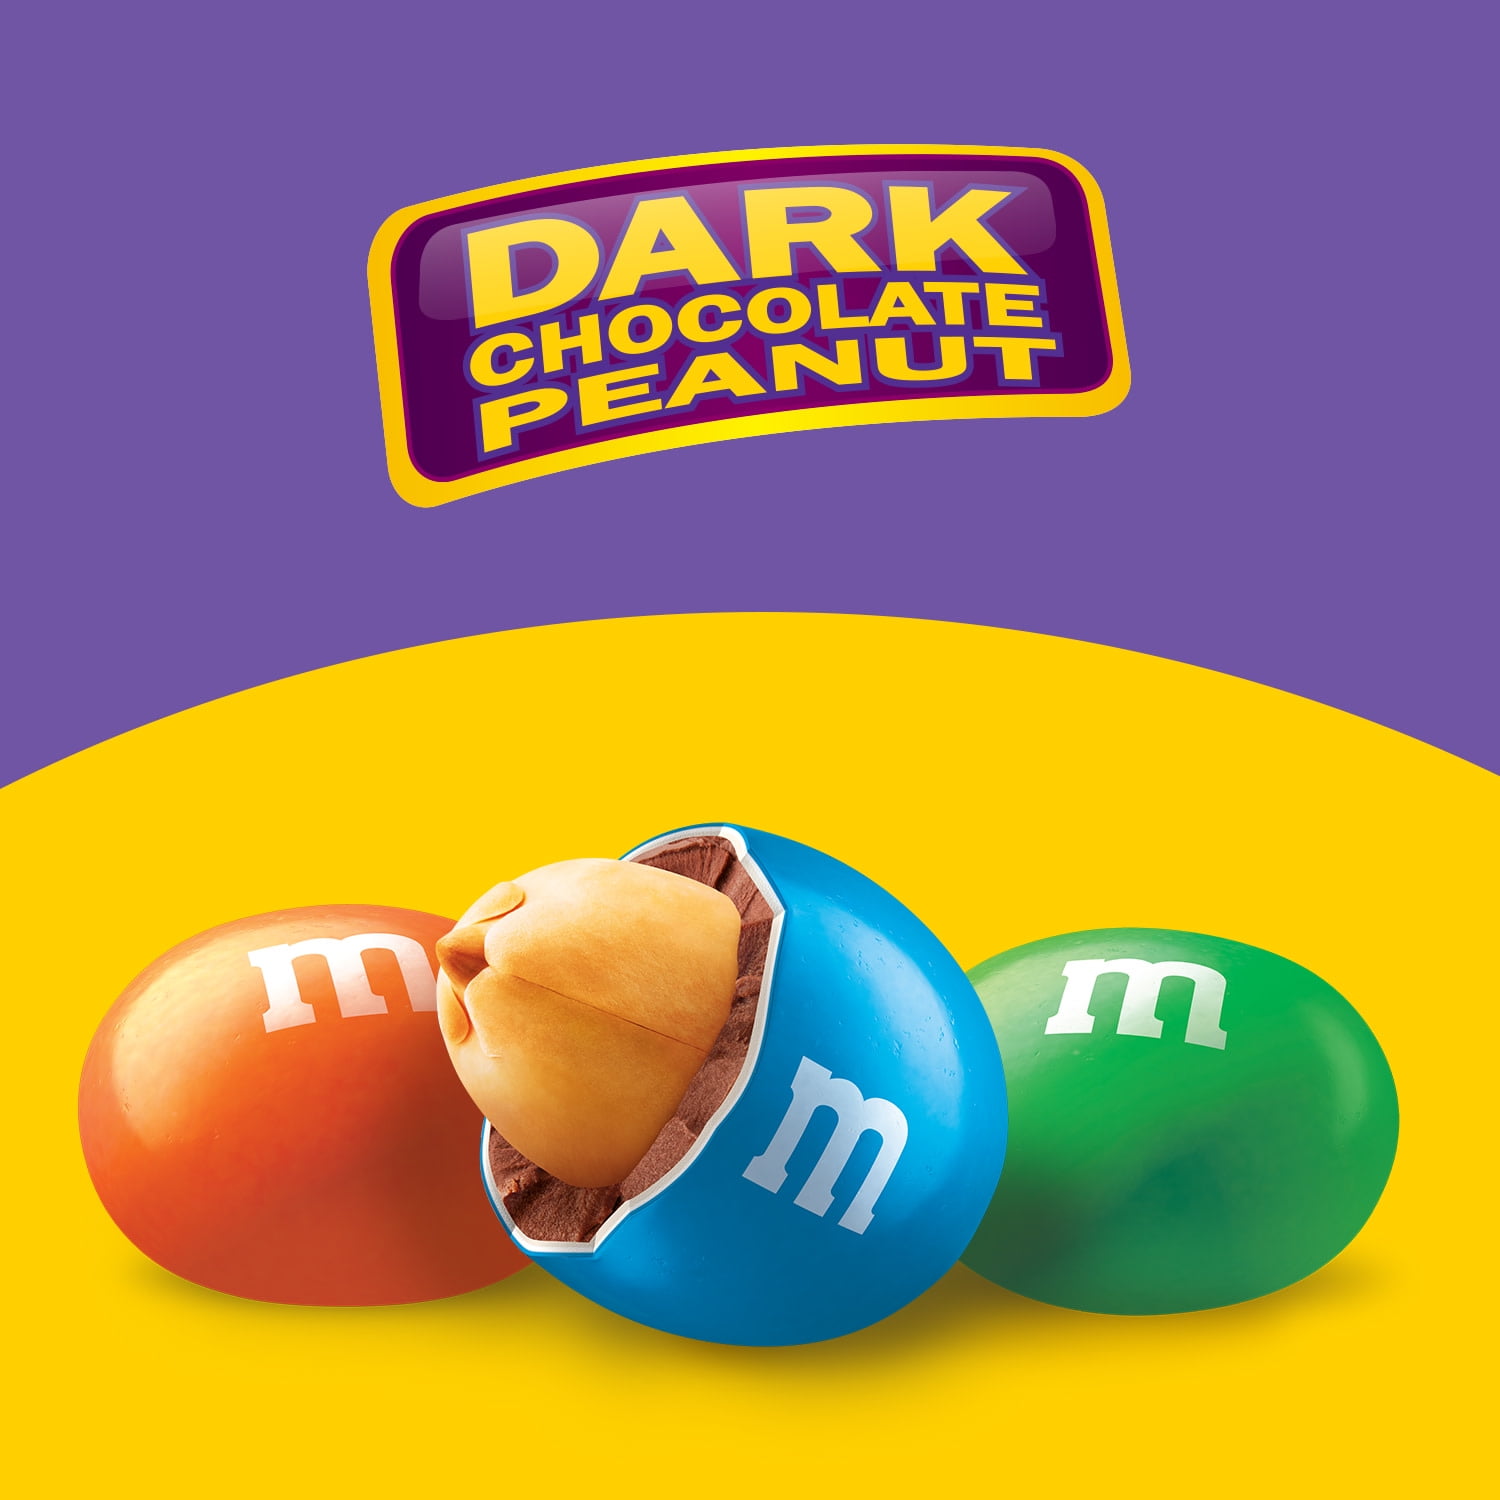 M&M's Peanut Milk Chocolate Candy, Family Size - 19.2 oz Bag